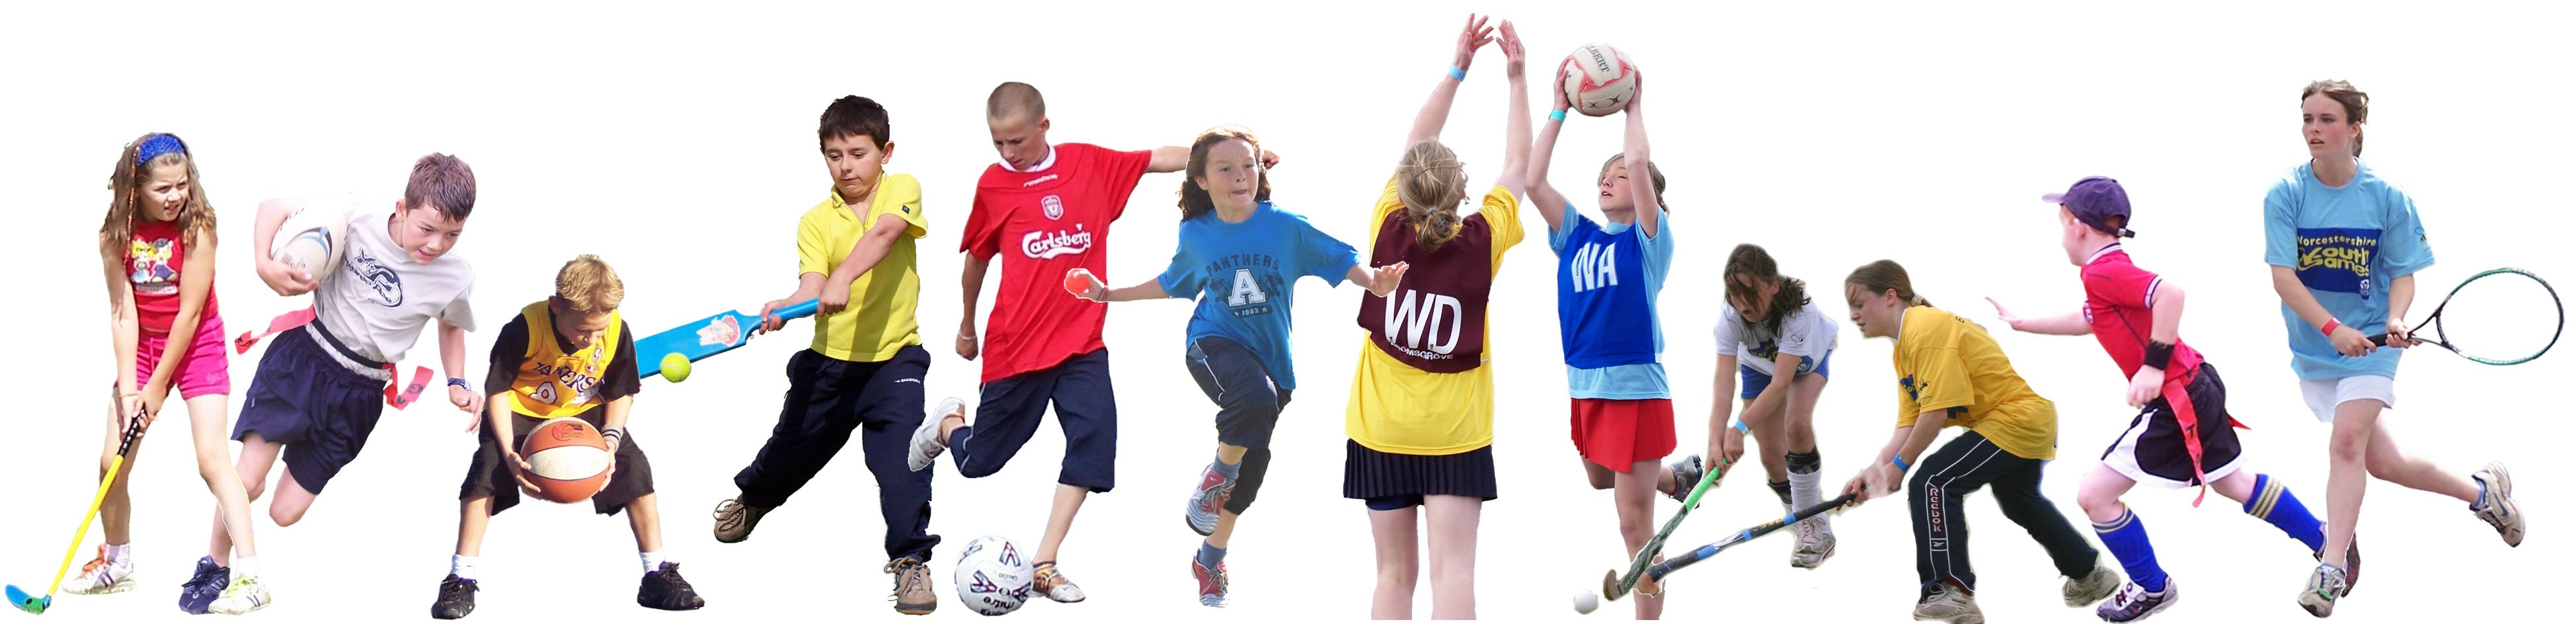 All life sport. Спорт дети. Физическая культура. Физическая культура на белом фоне. Спортивные дети на белом фоне.